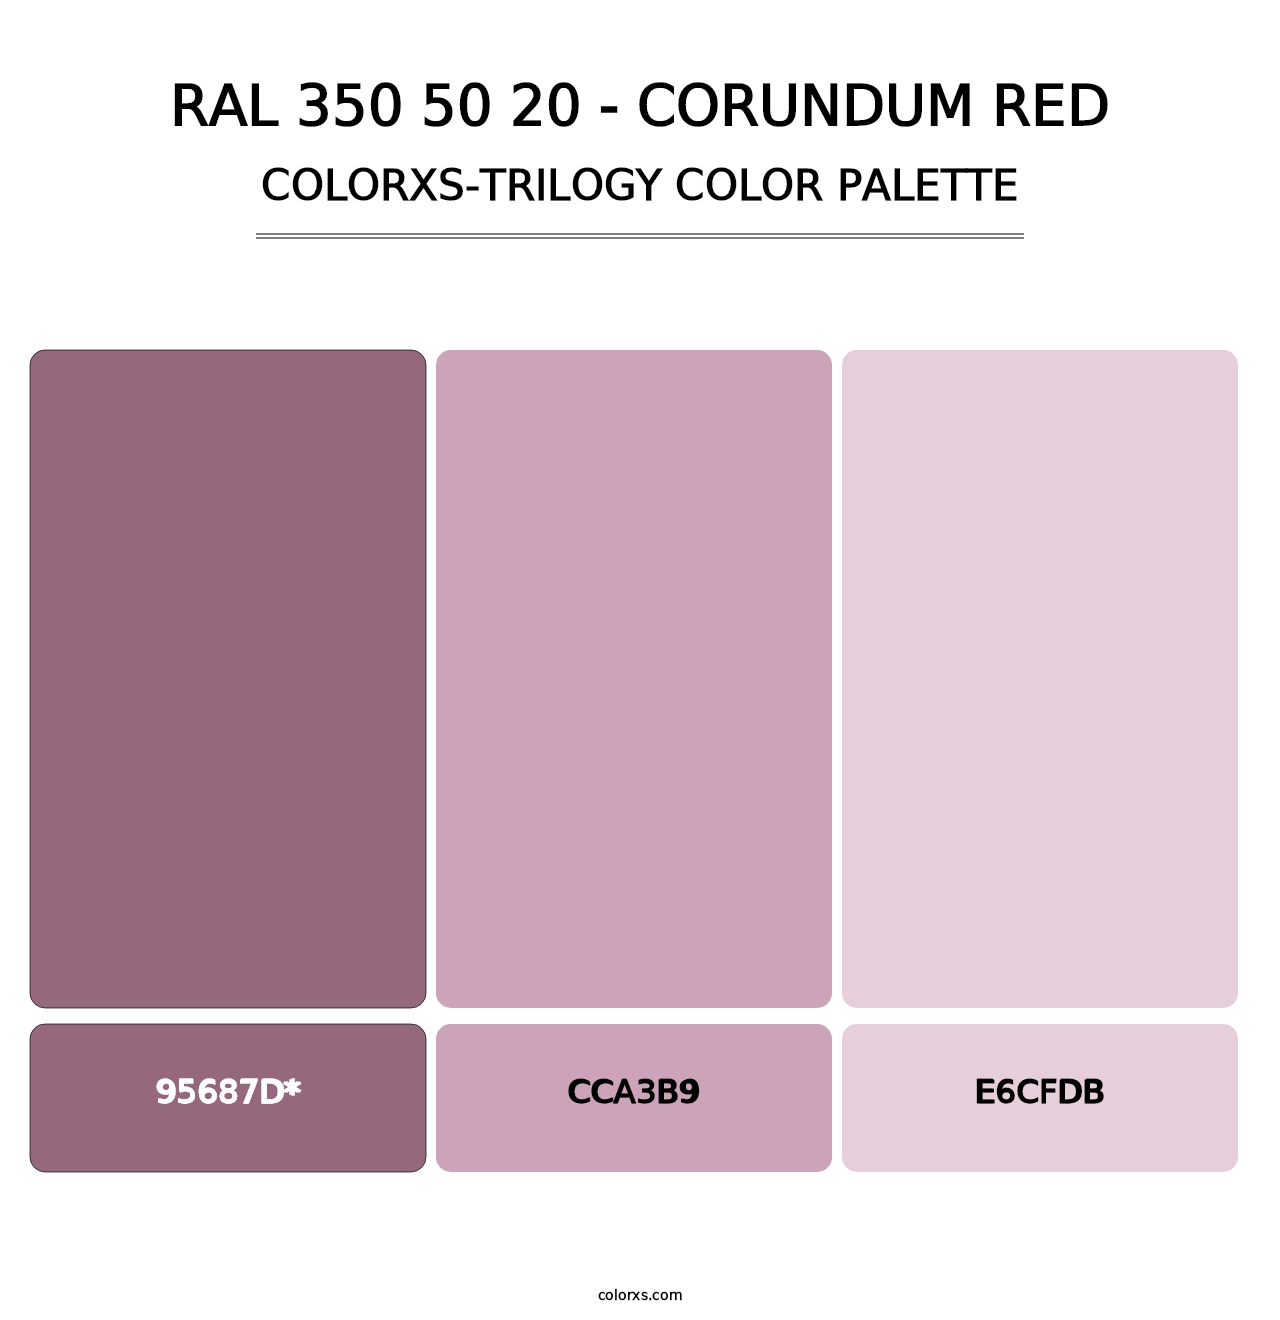 RAL 350 50 20 - Corundum Red - Colorxs Trilogy Palette